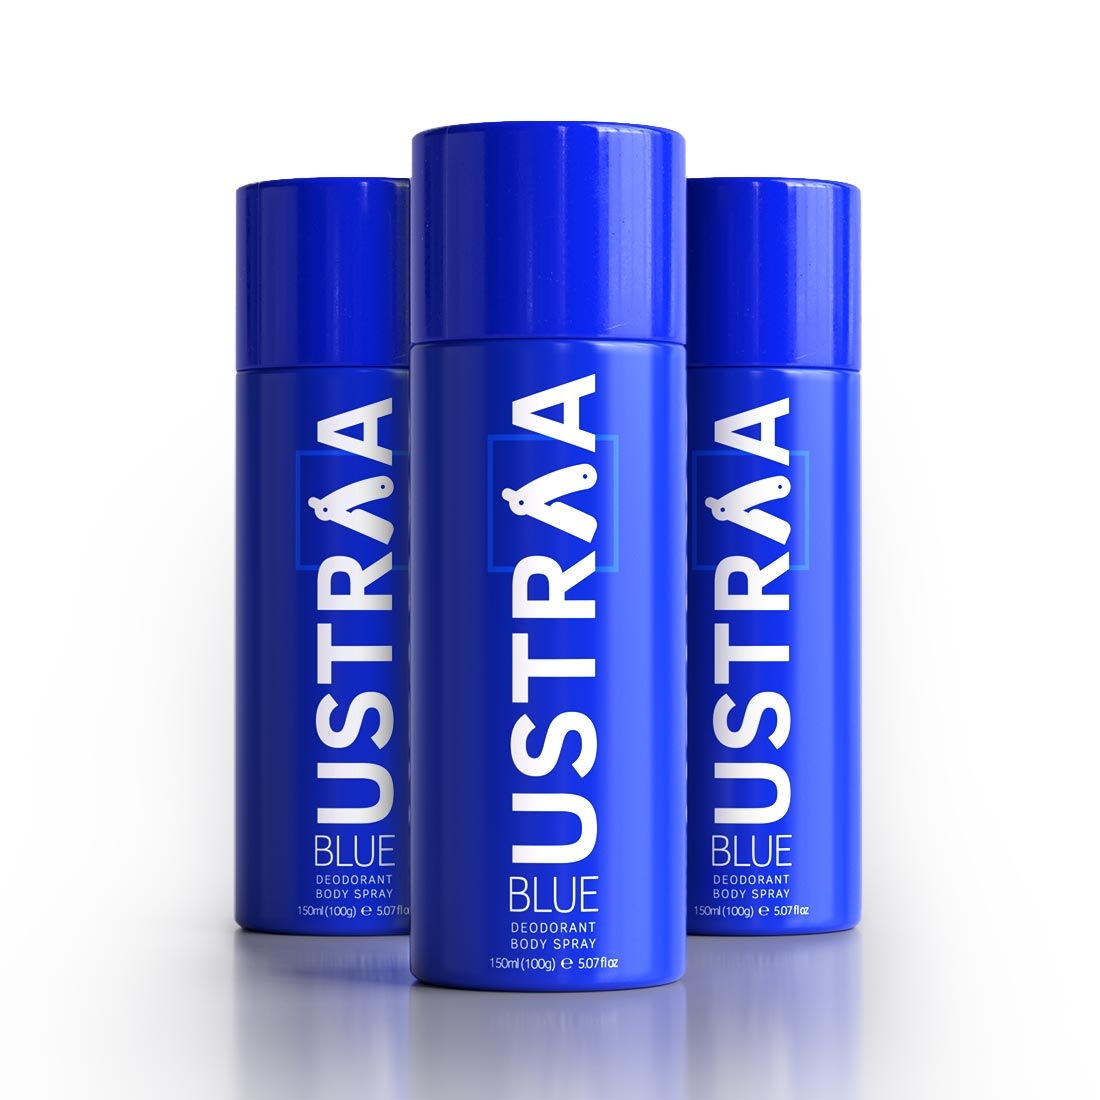 Ustraa | Ustraa Blue Deodorant Body Spray, 150 ml- Set of 3